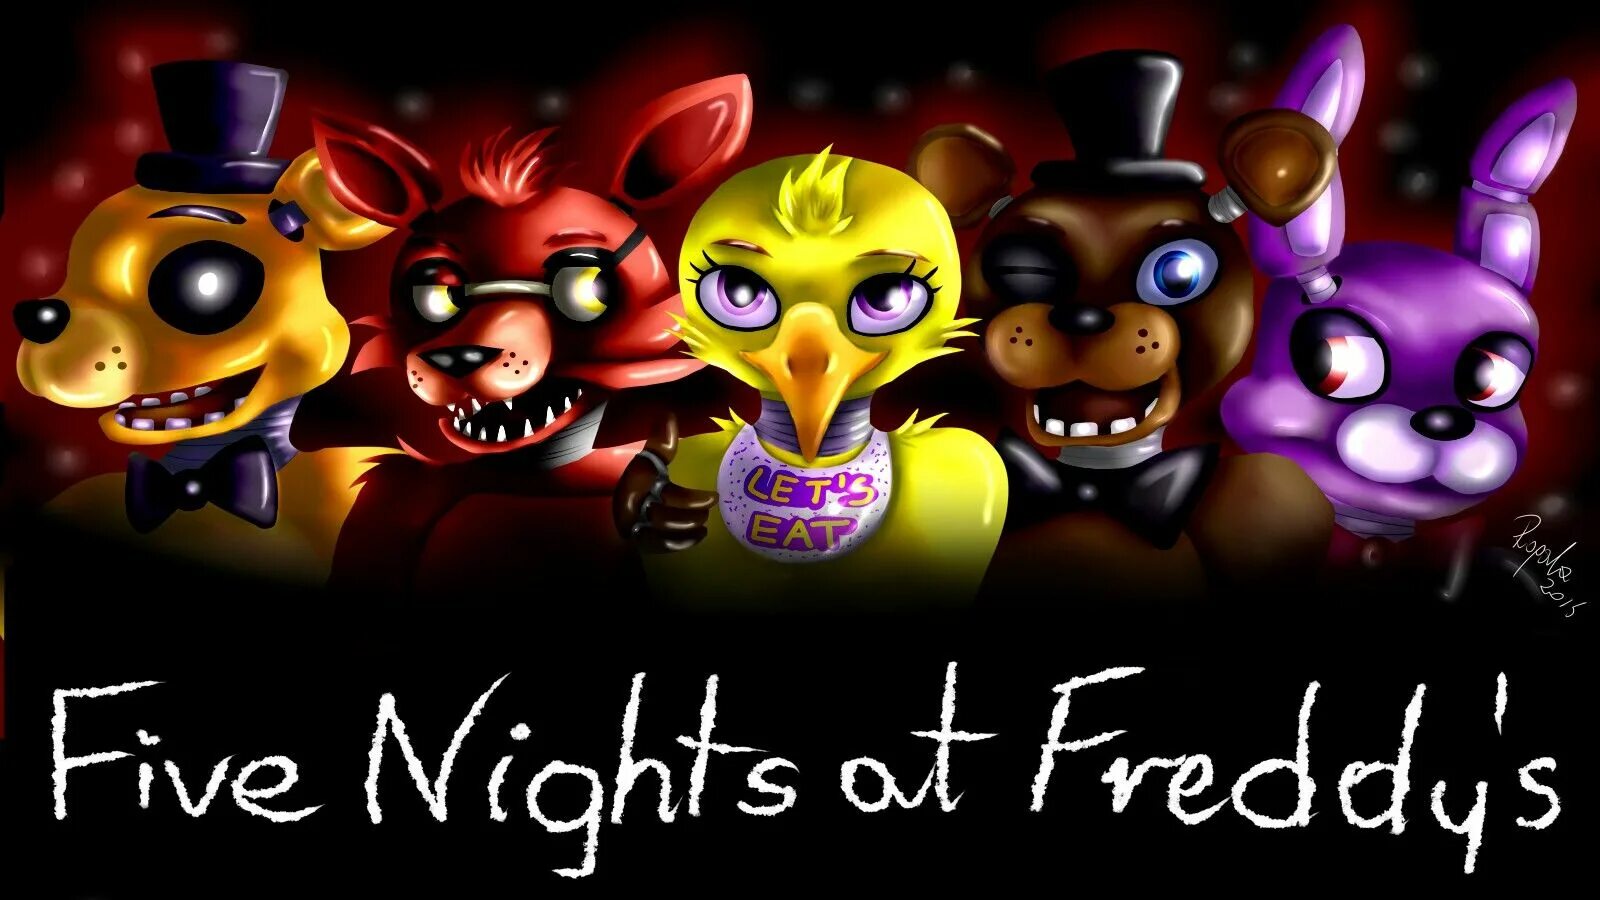 Фиве Нигхт АТ Фредди. ФНАФ 1. Файф Найт Фредди. Five Nights at Freddy's Фредди.